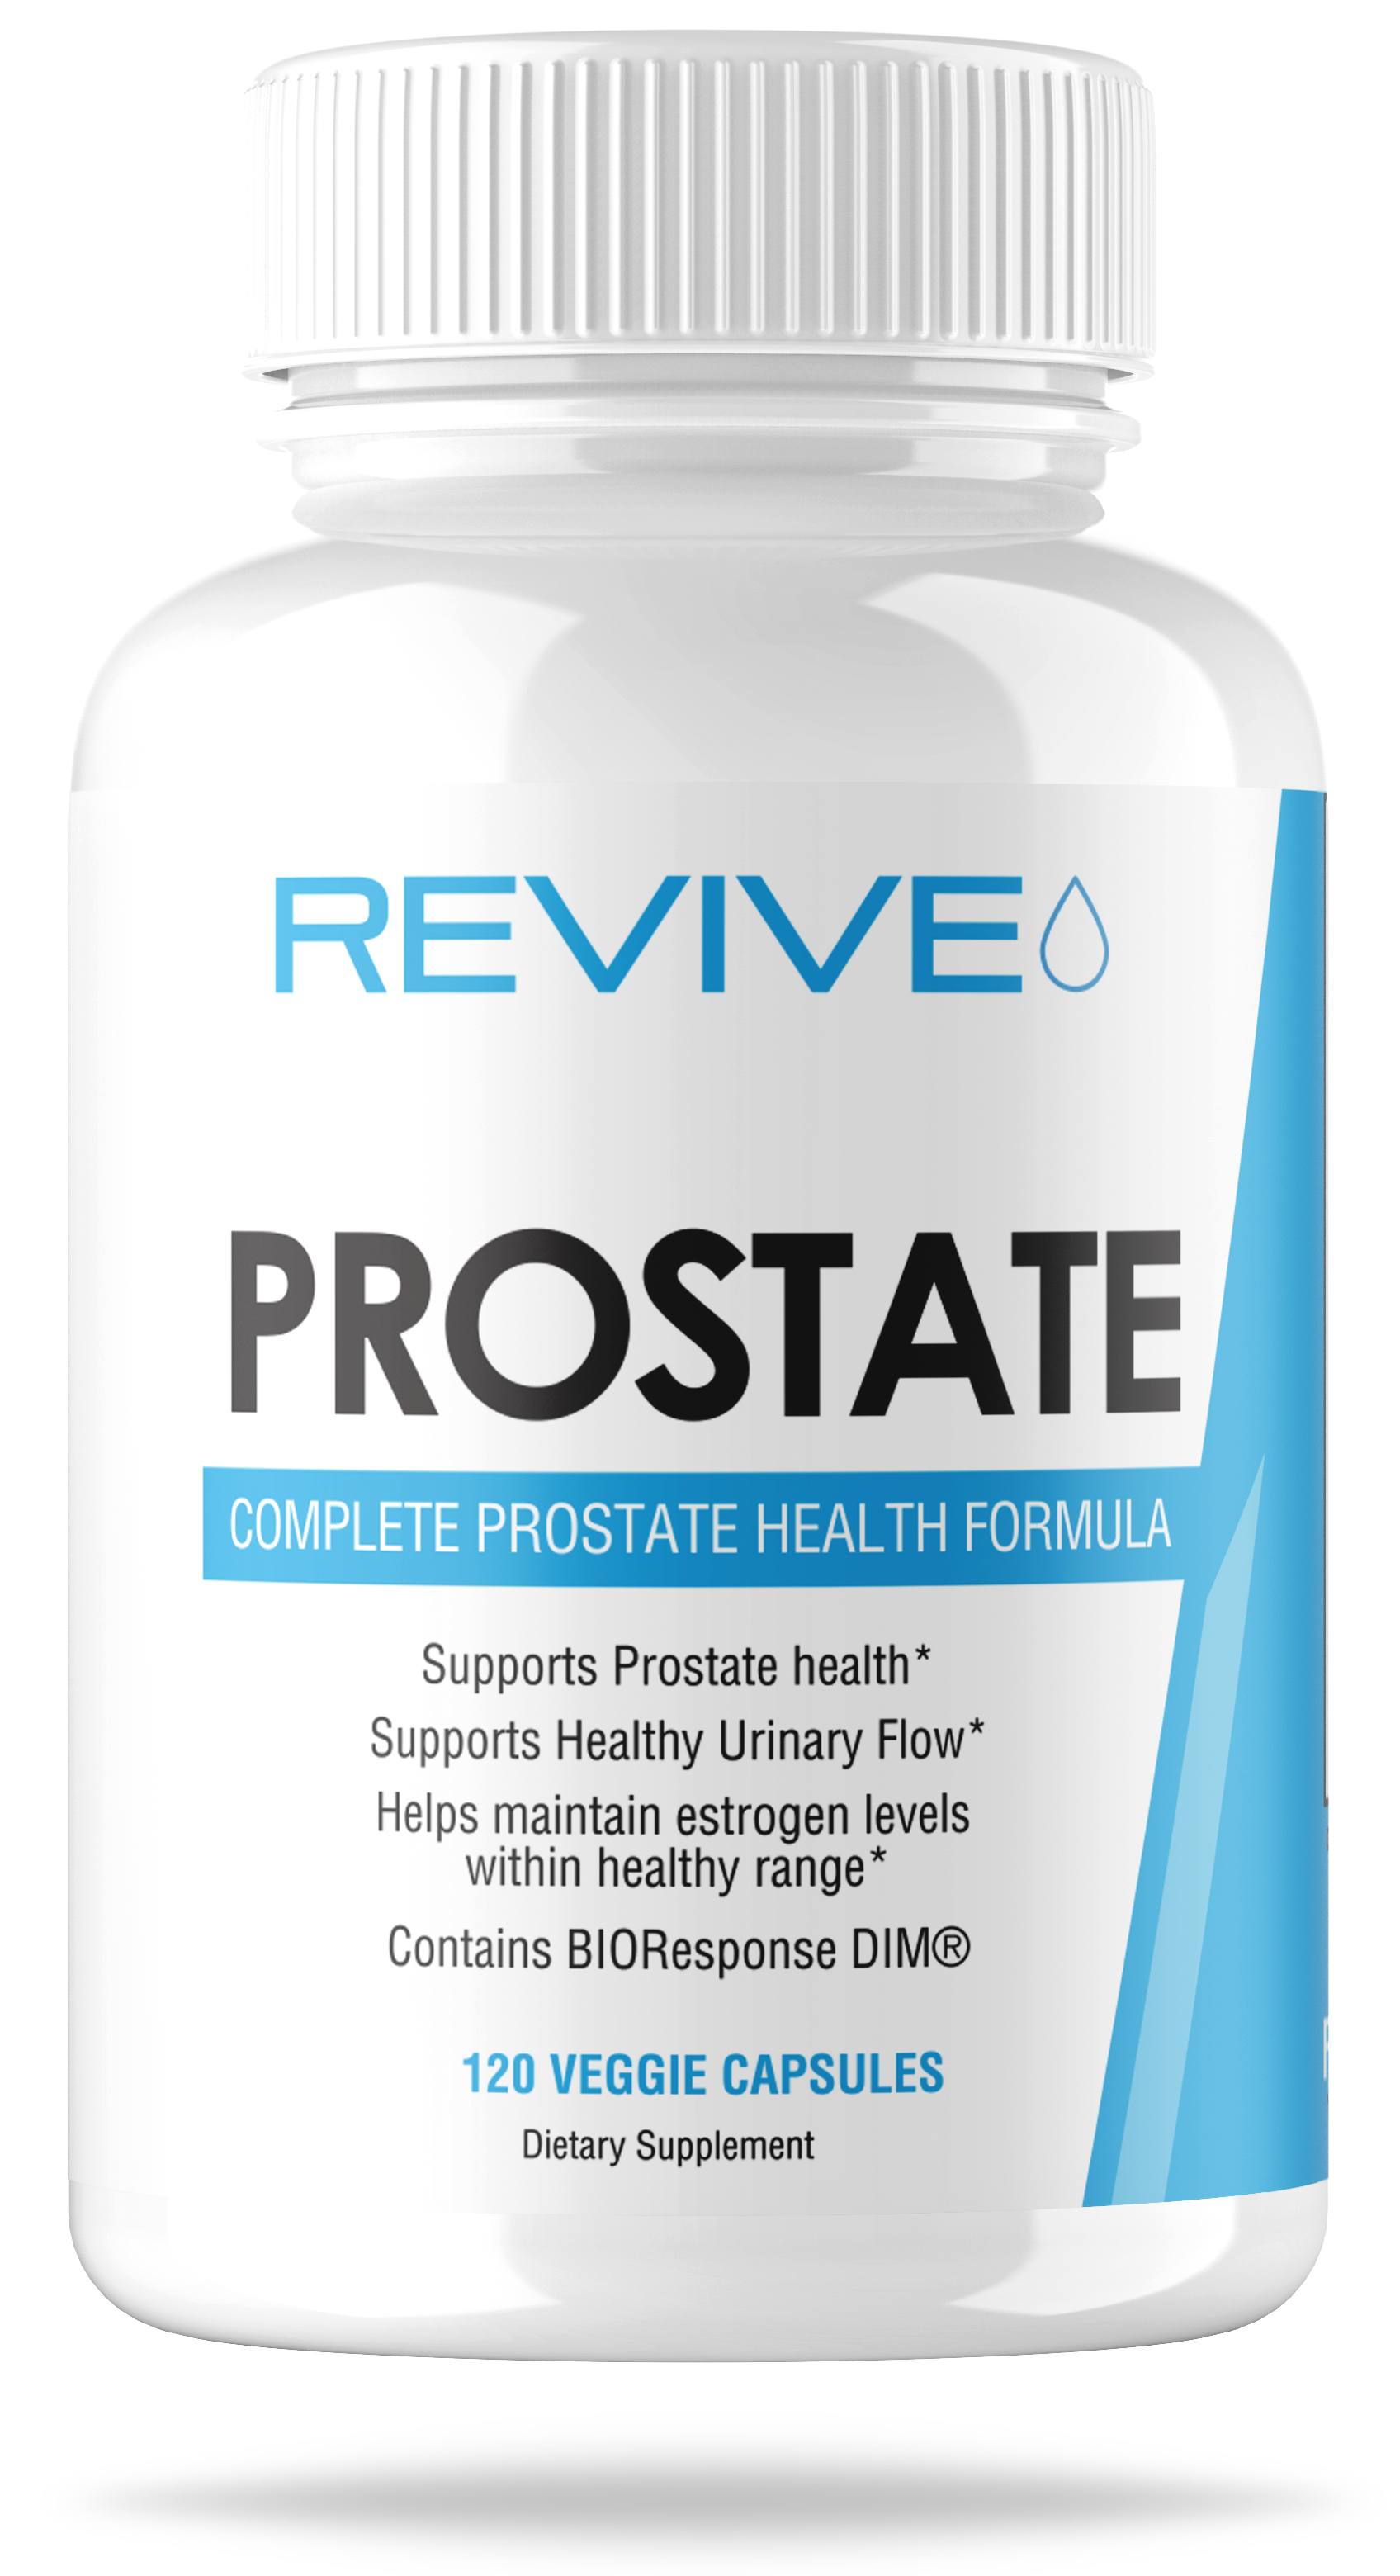 Revive MD Prostate